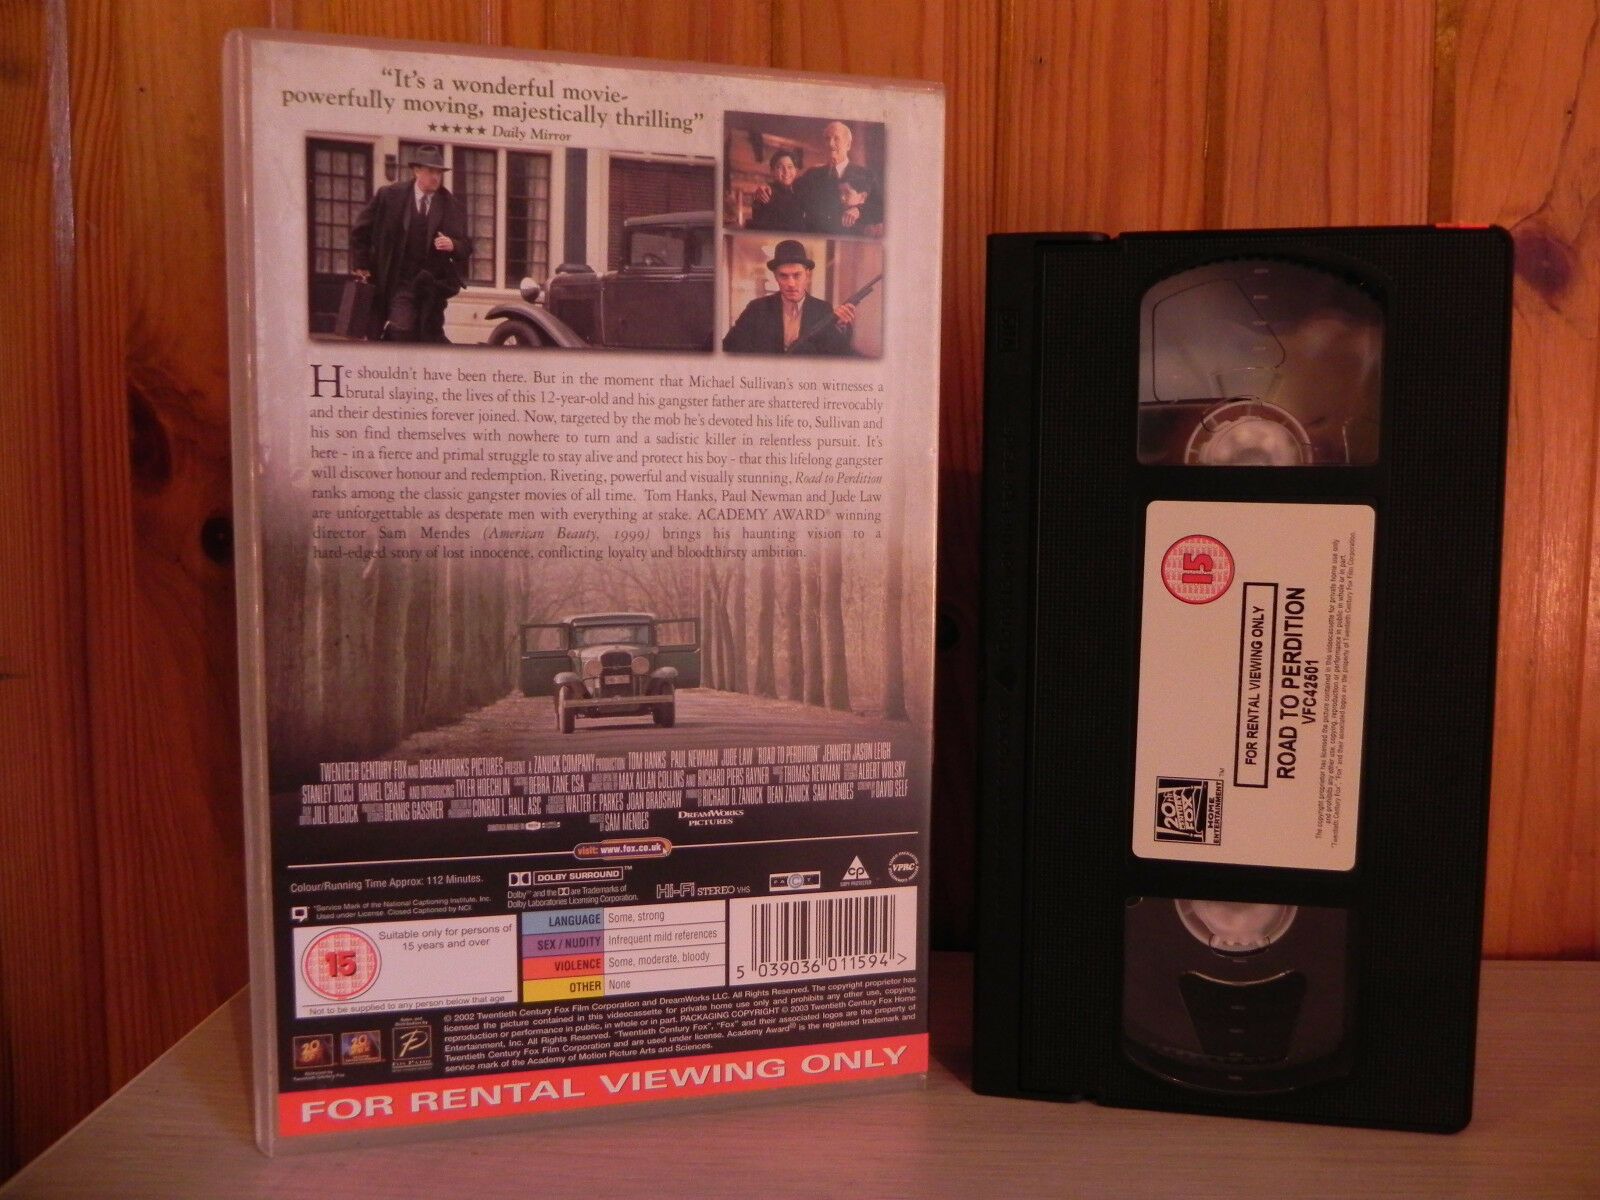 ROAD TO PERDITION - Tom Hanks - Crime Drama - Big Box - Ex-Rental - 23297 - VHS-